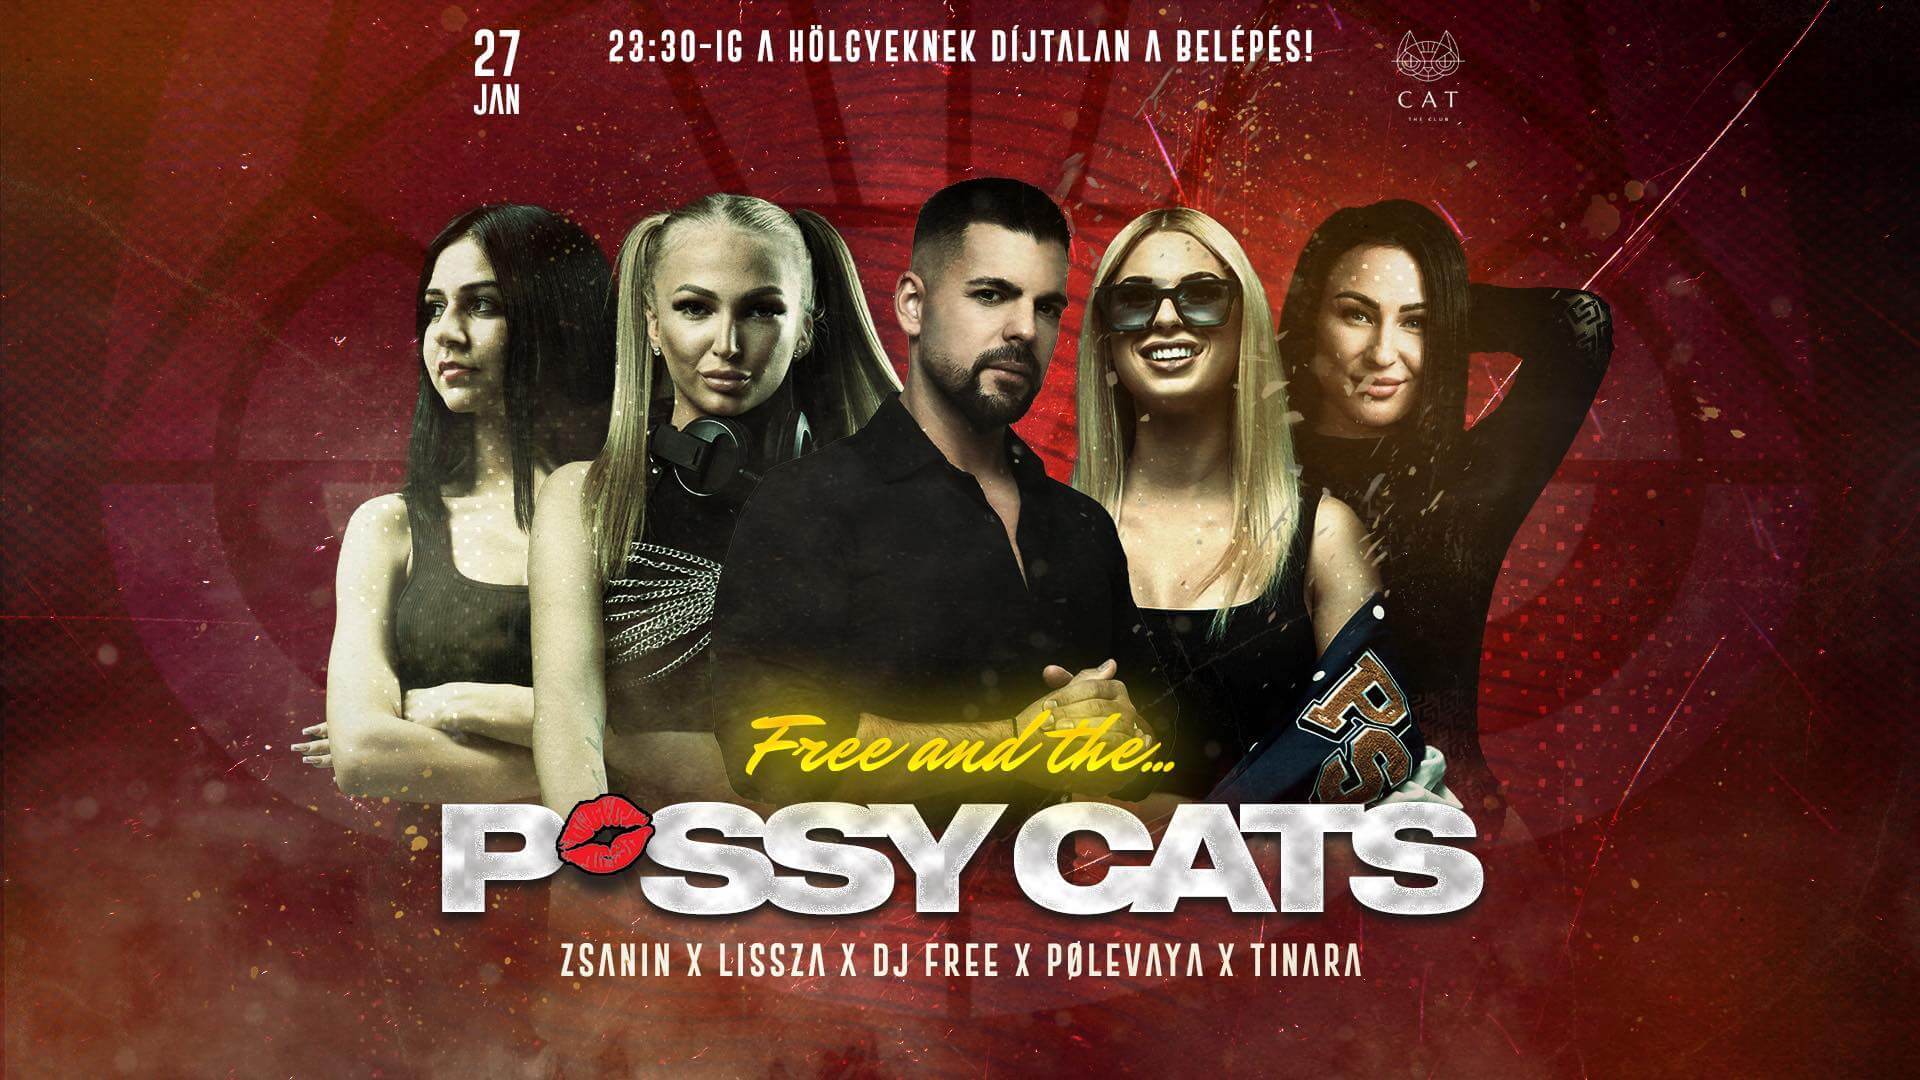 Pussy Cats, Cat Budapest, 27 January